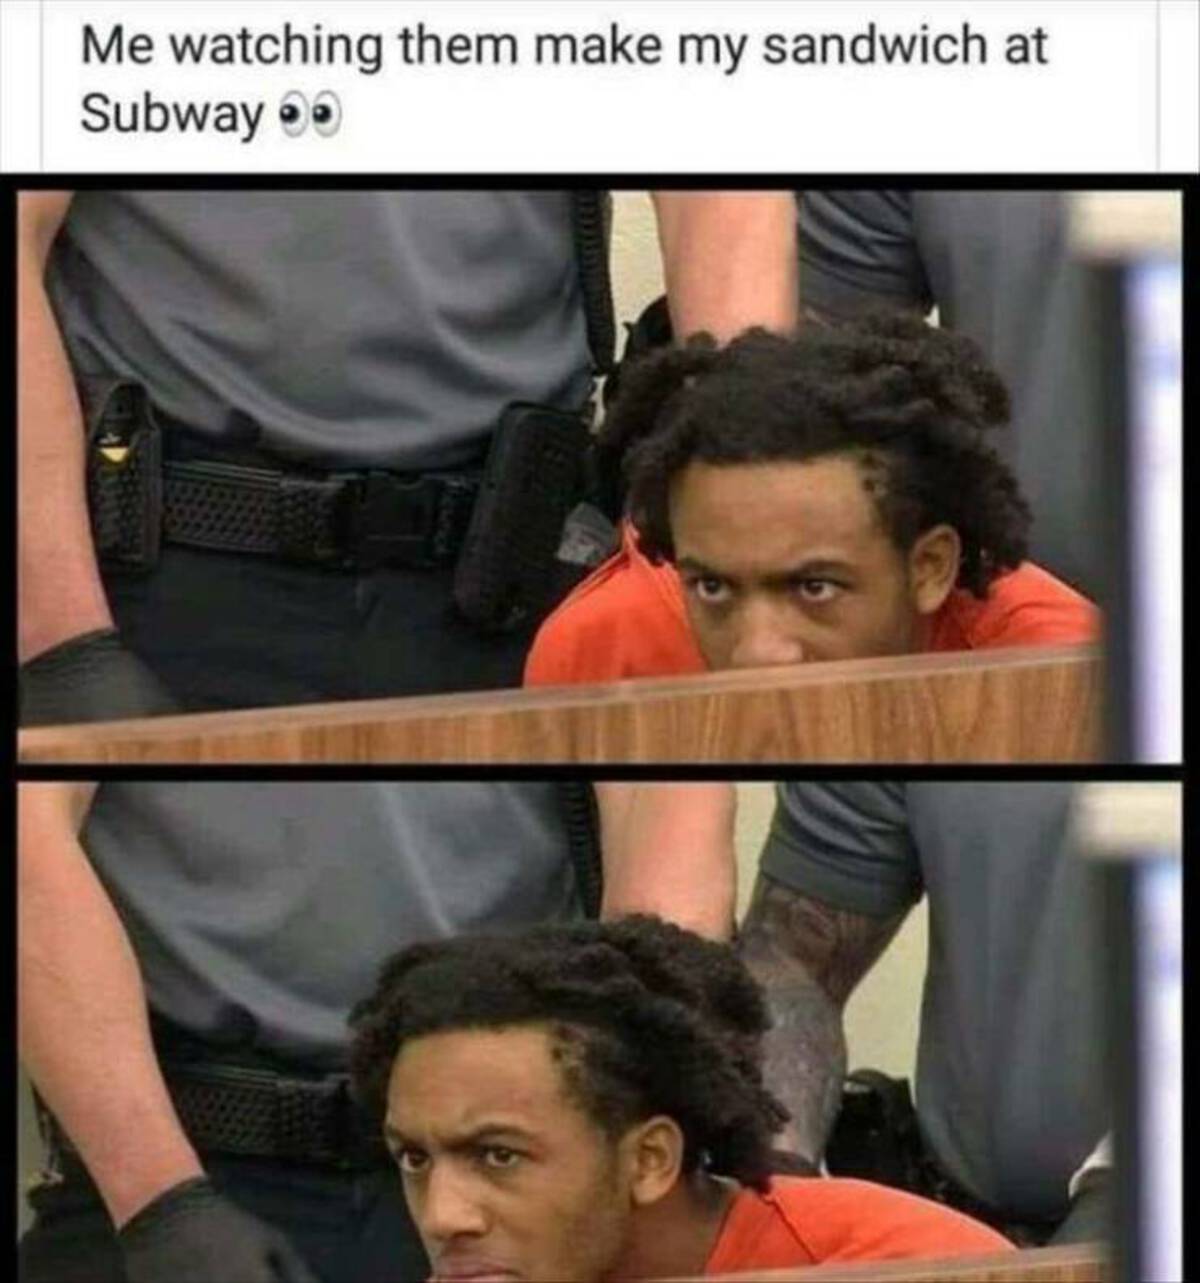 photo caption - Me watching them make my sandwich at Subway